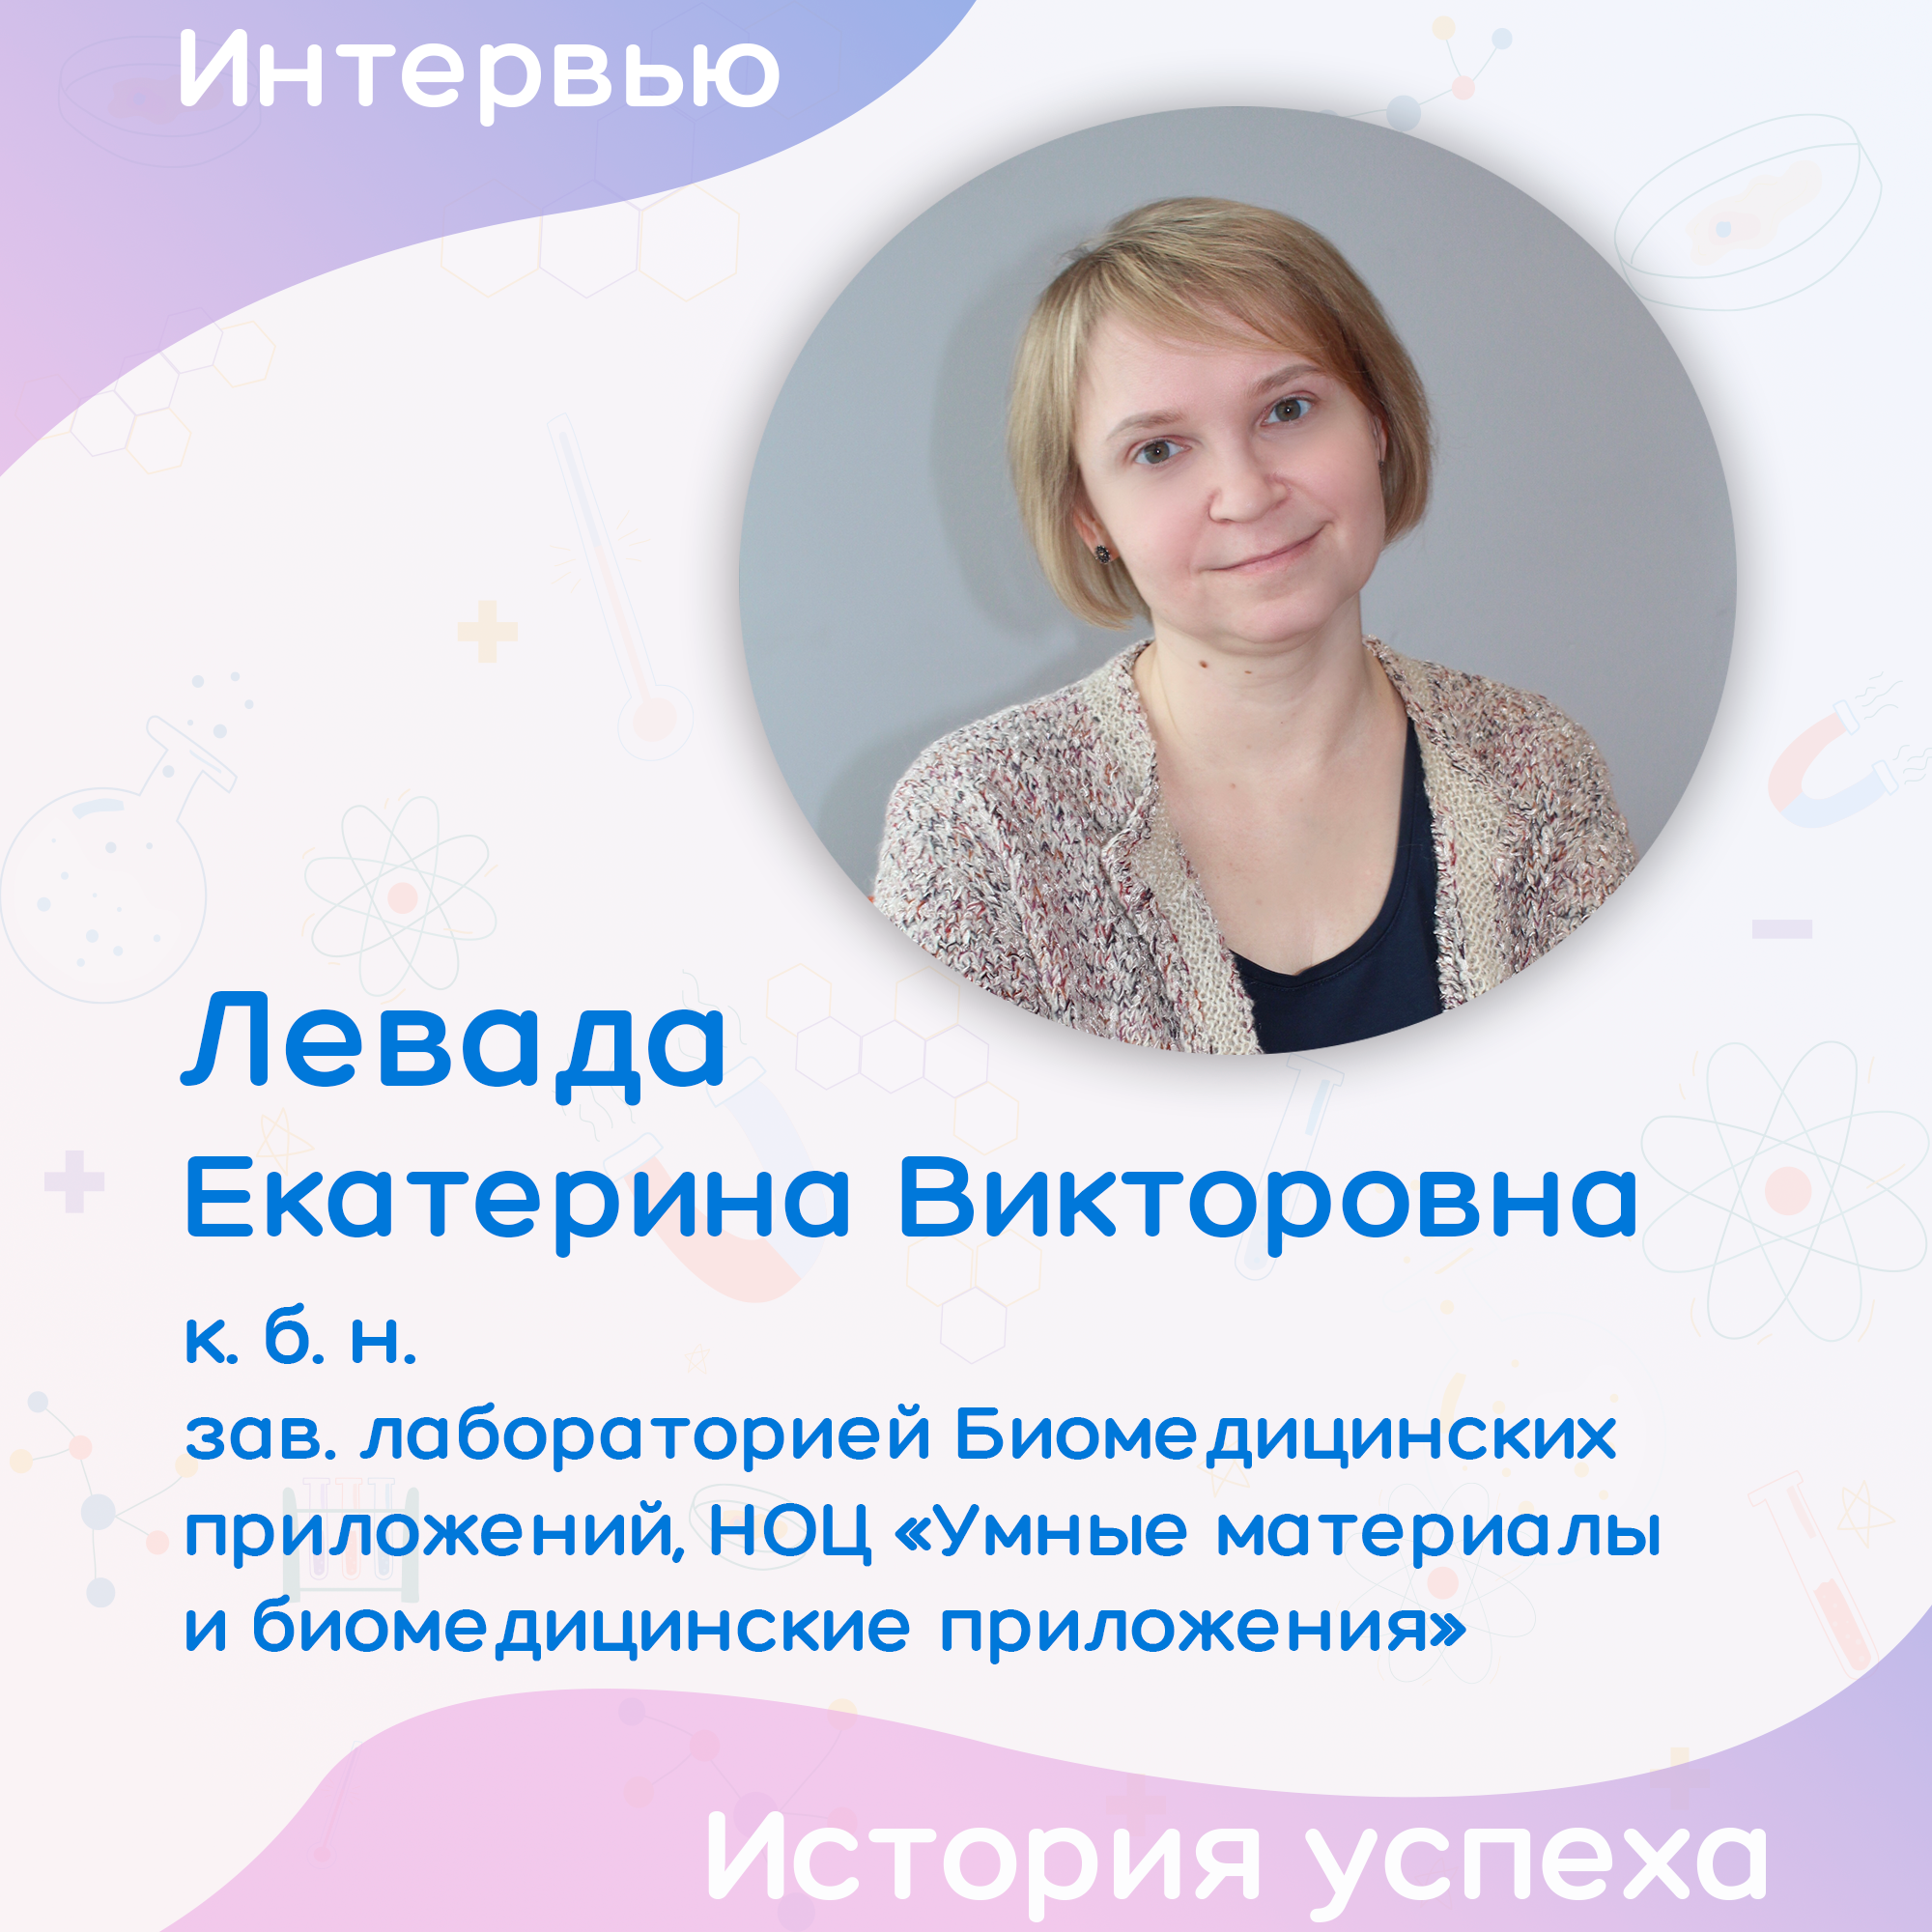 История успеха: Екатерина Левада